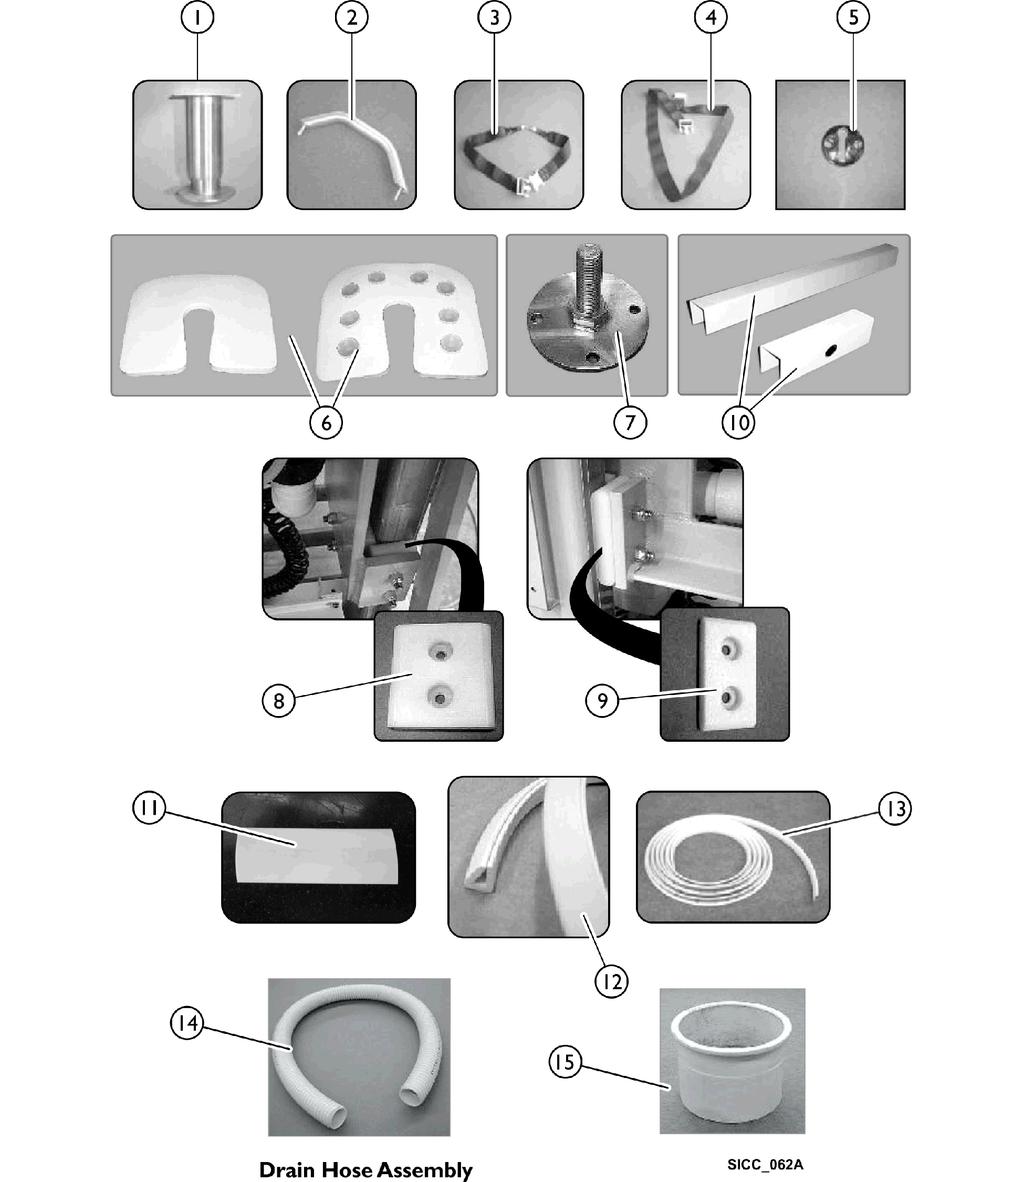 Tub Shell Components